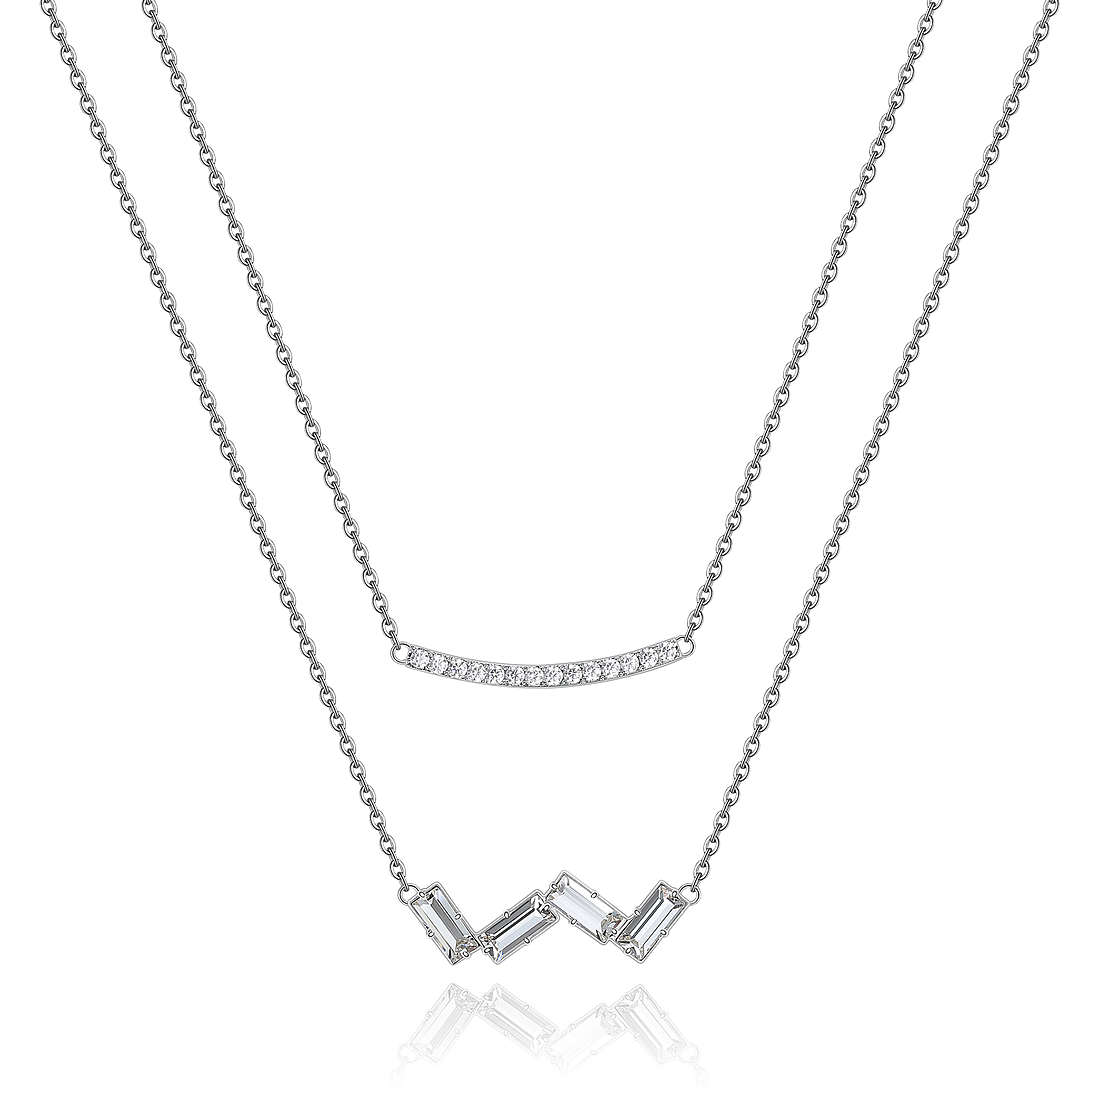 necklace woman jewellery Brosway Calliope BOP05